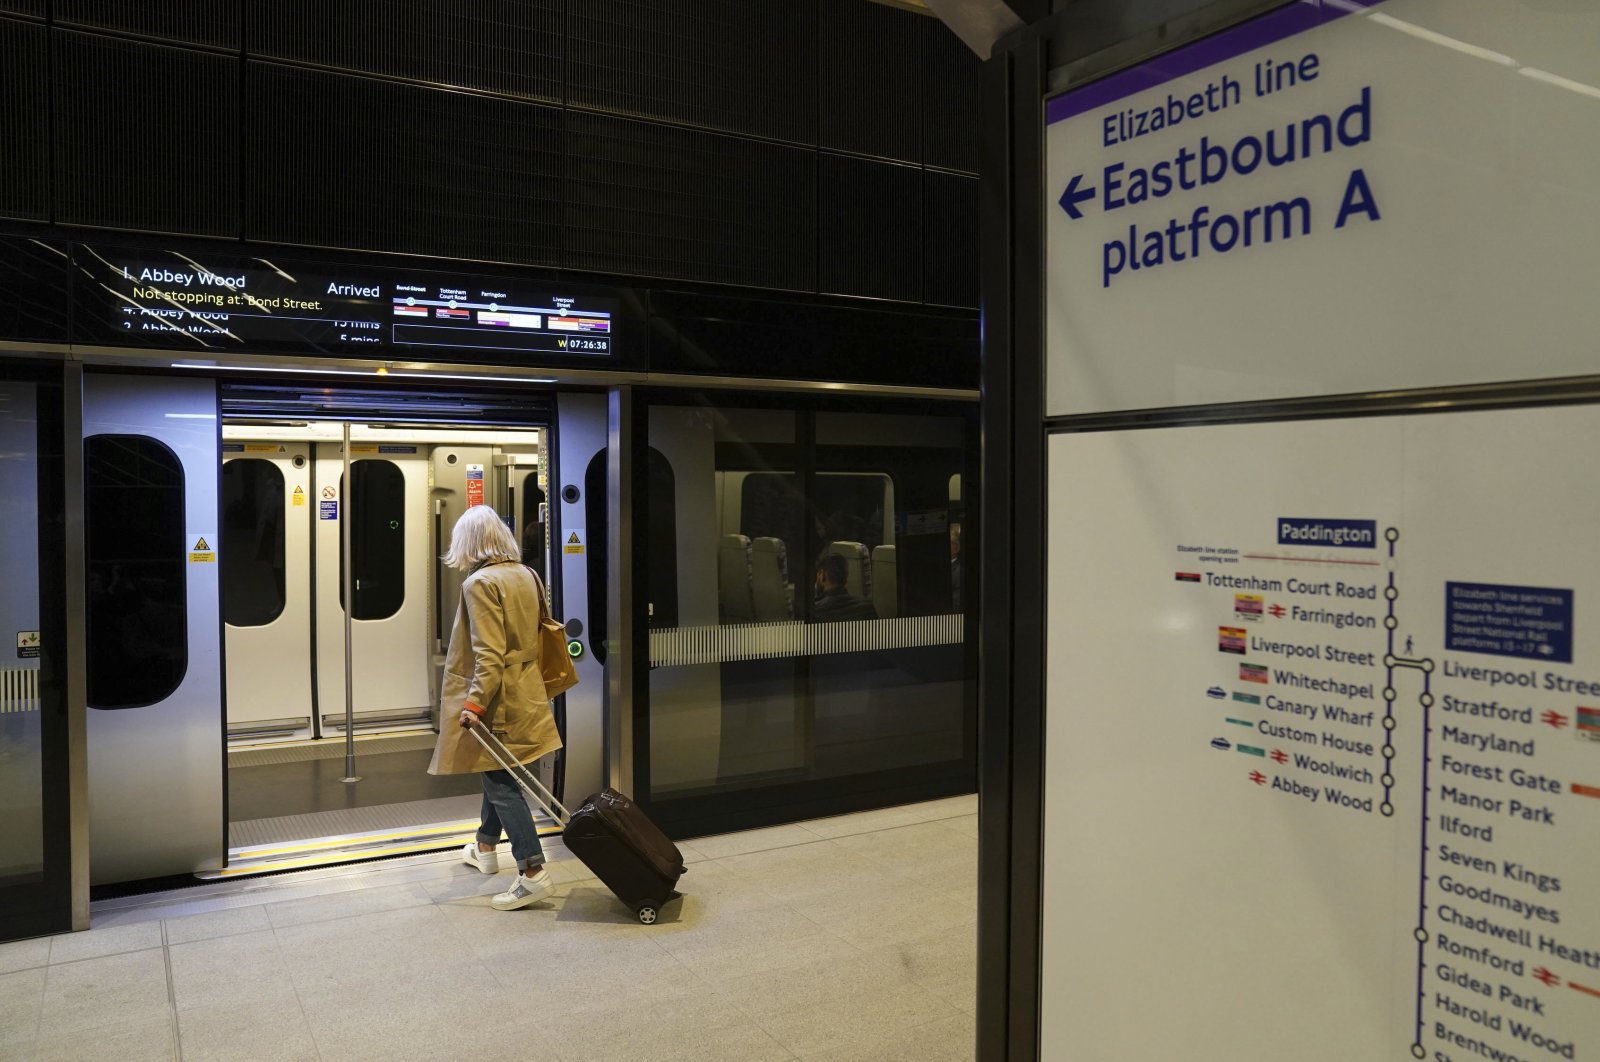 A passenger boards an Elizabeth line train at Paddington Station, London, U.K., May 24, 2022. (AP Photo)